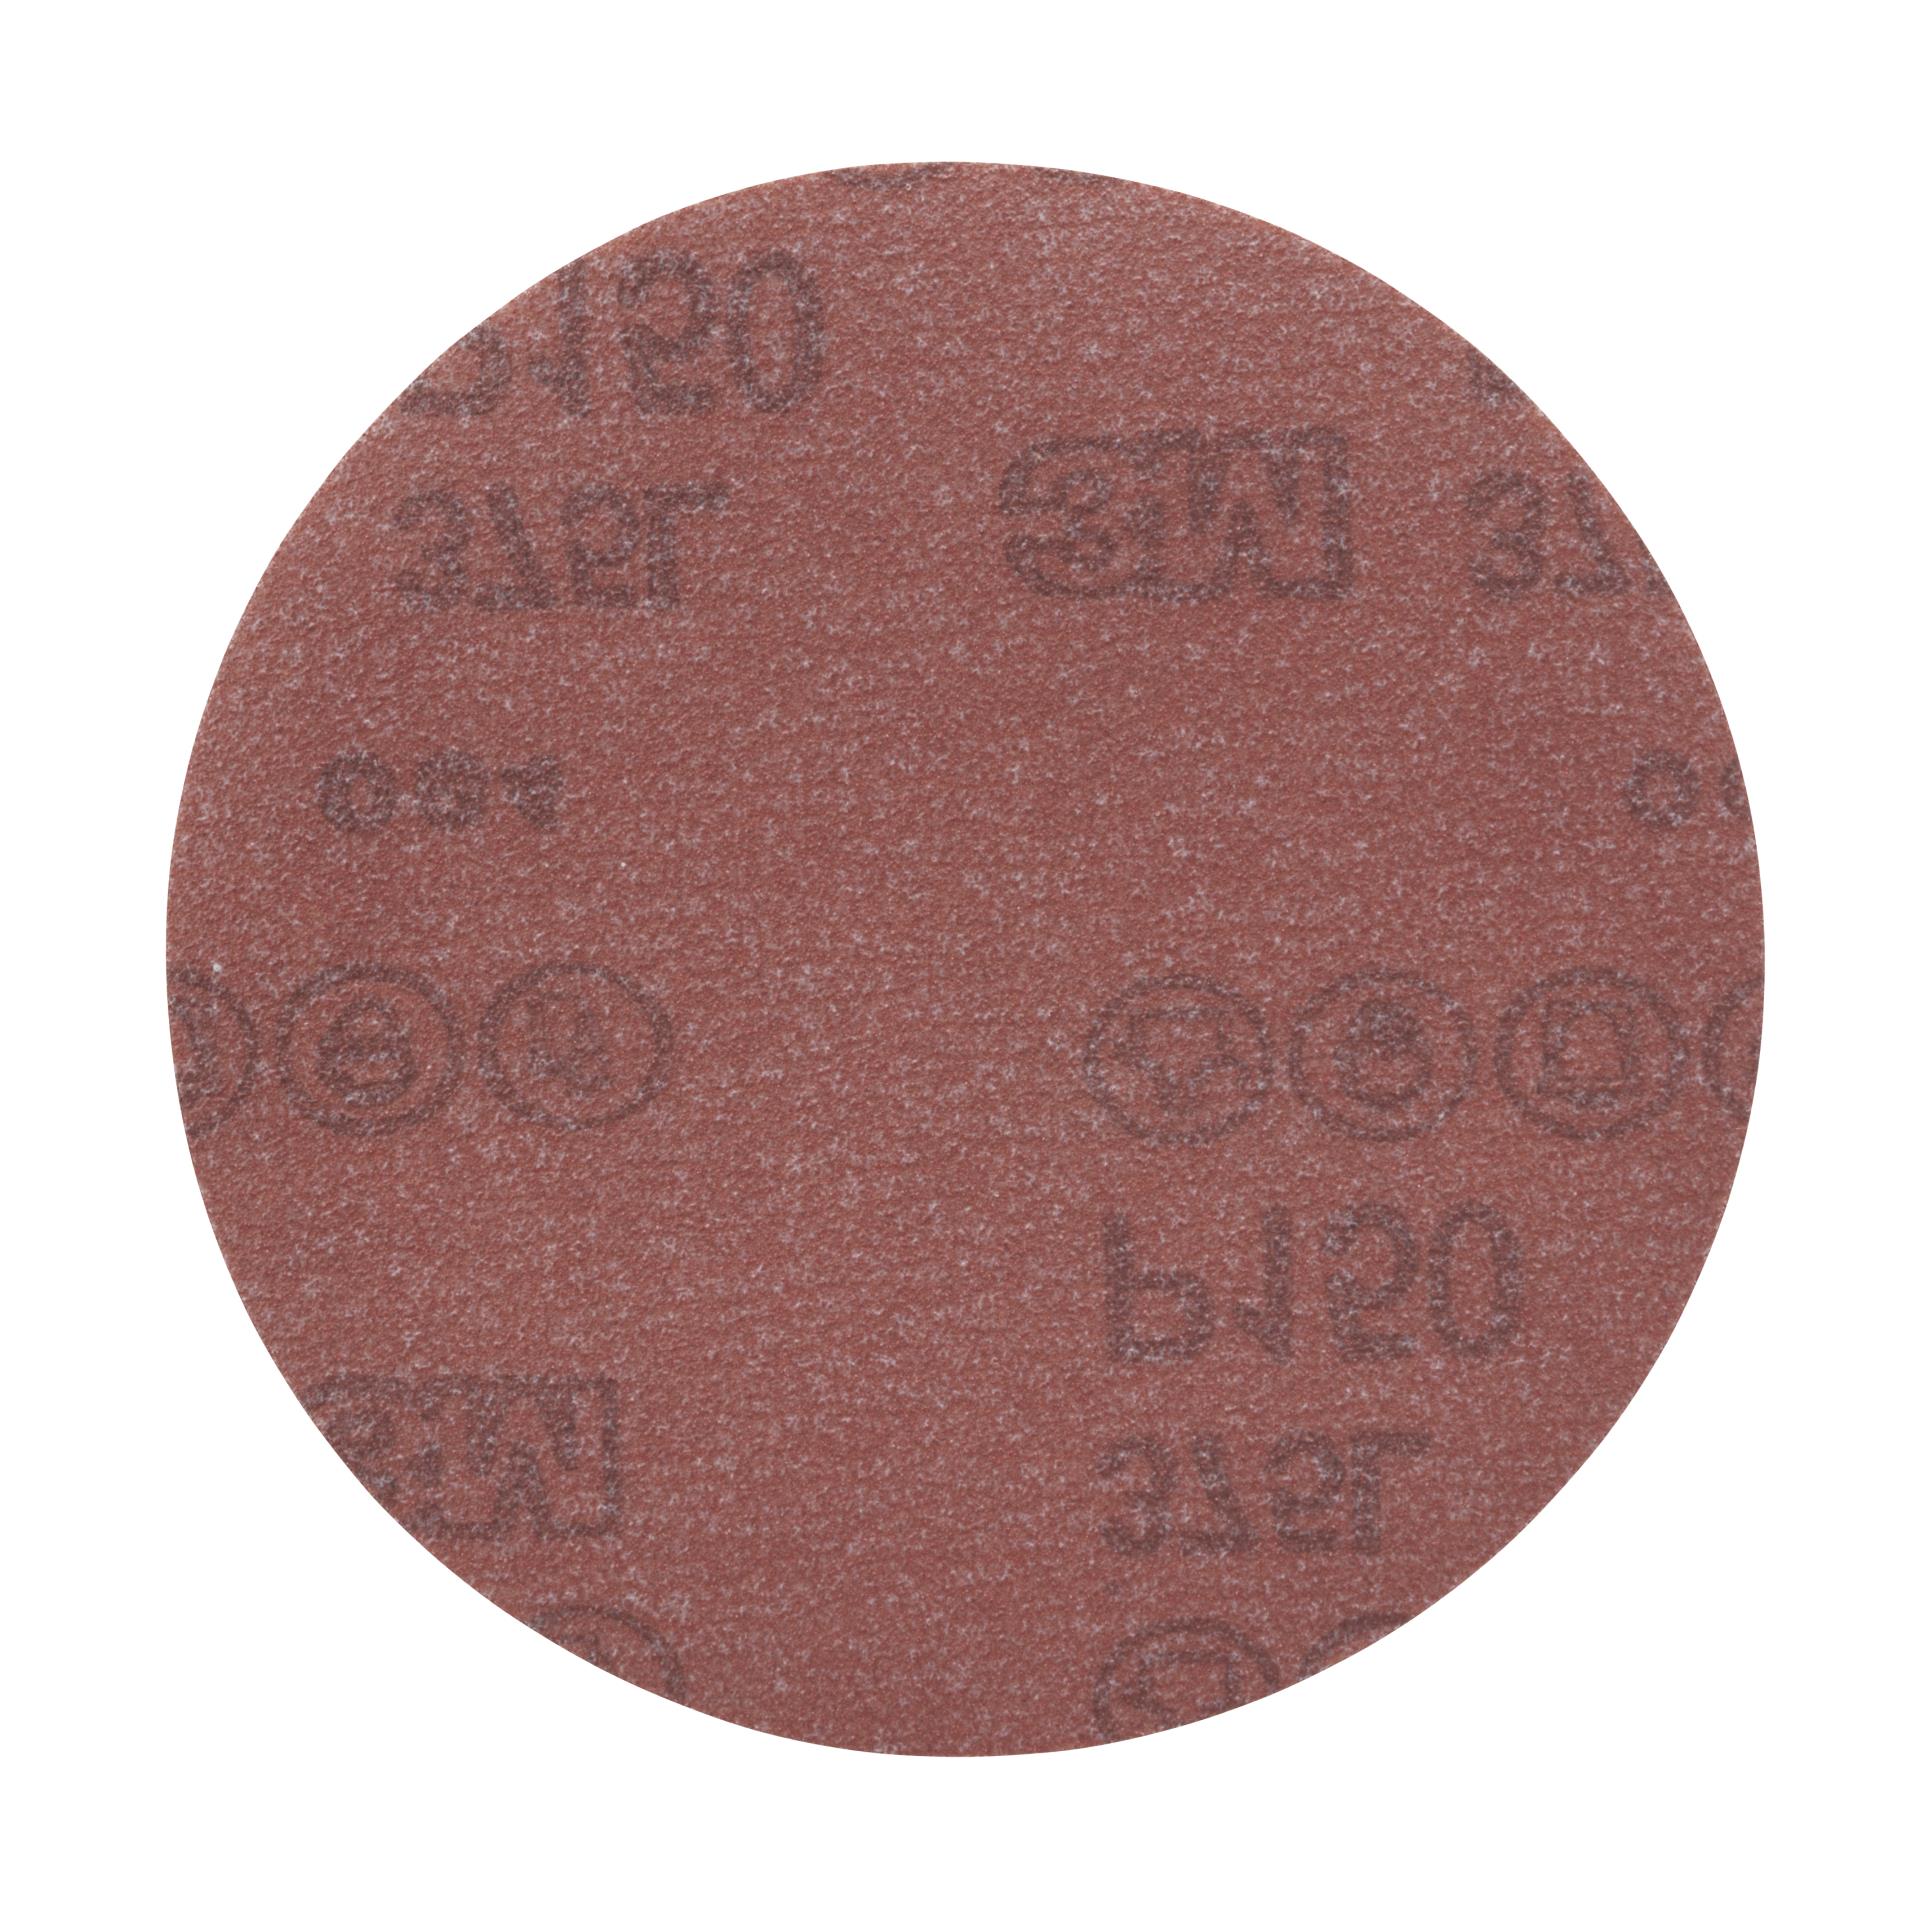 Blunt Copper Chrome Replacement for Mixer m10 cm 35 Diameter 10 